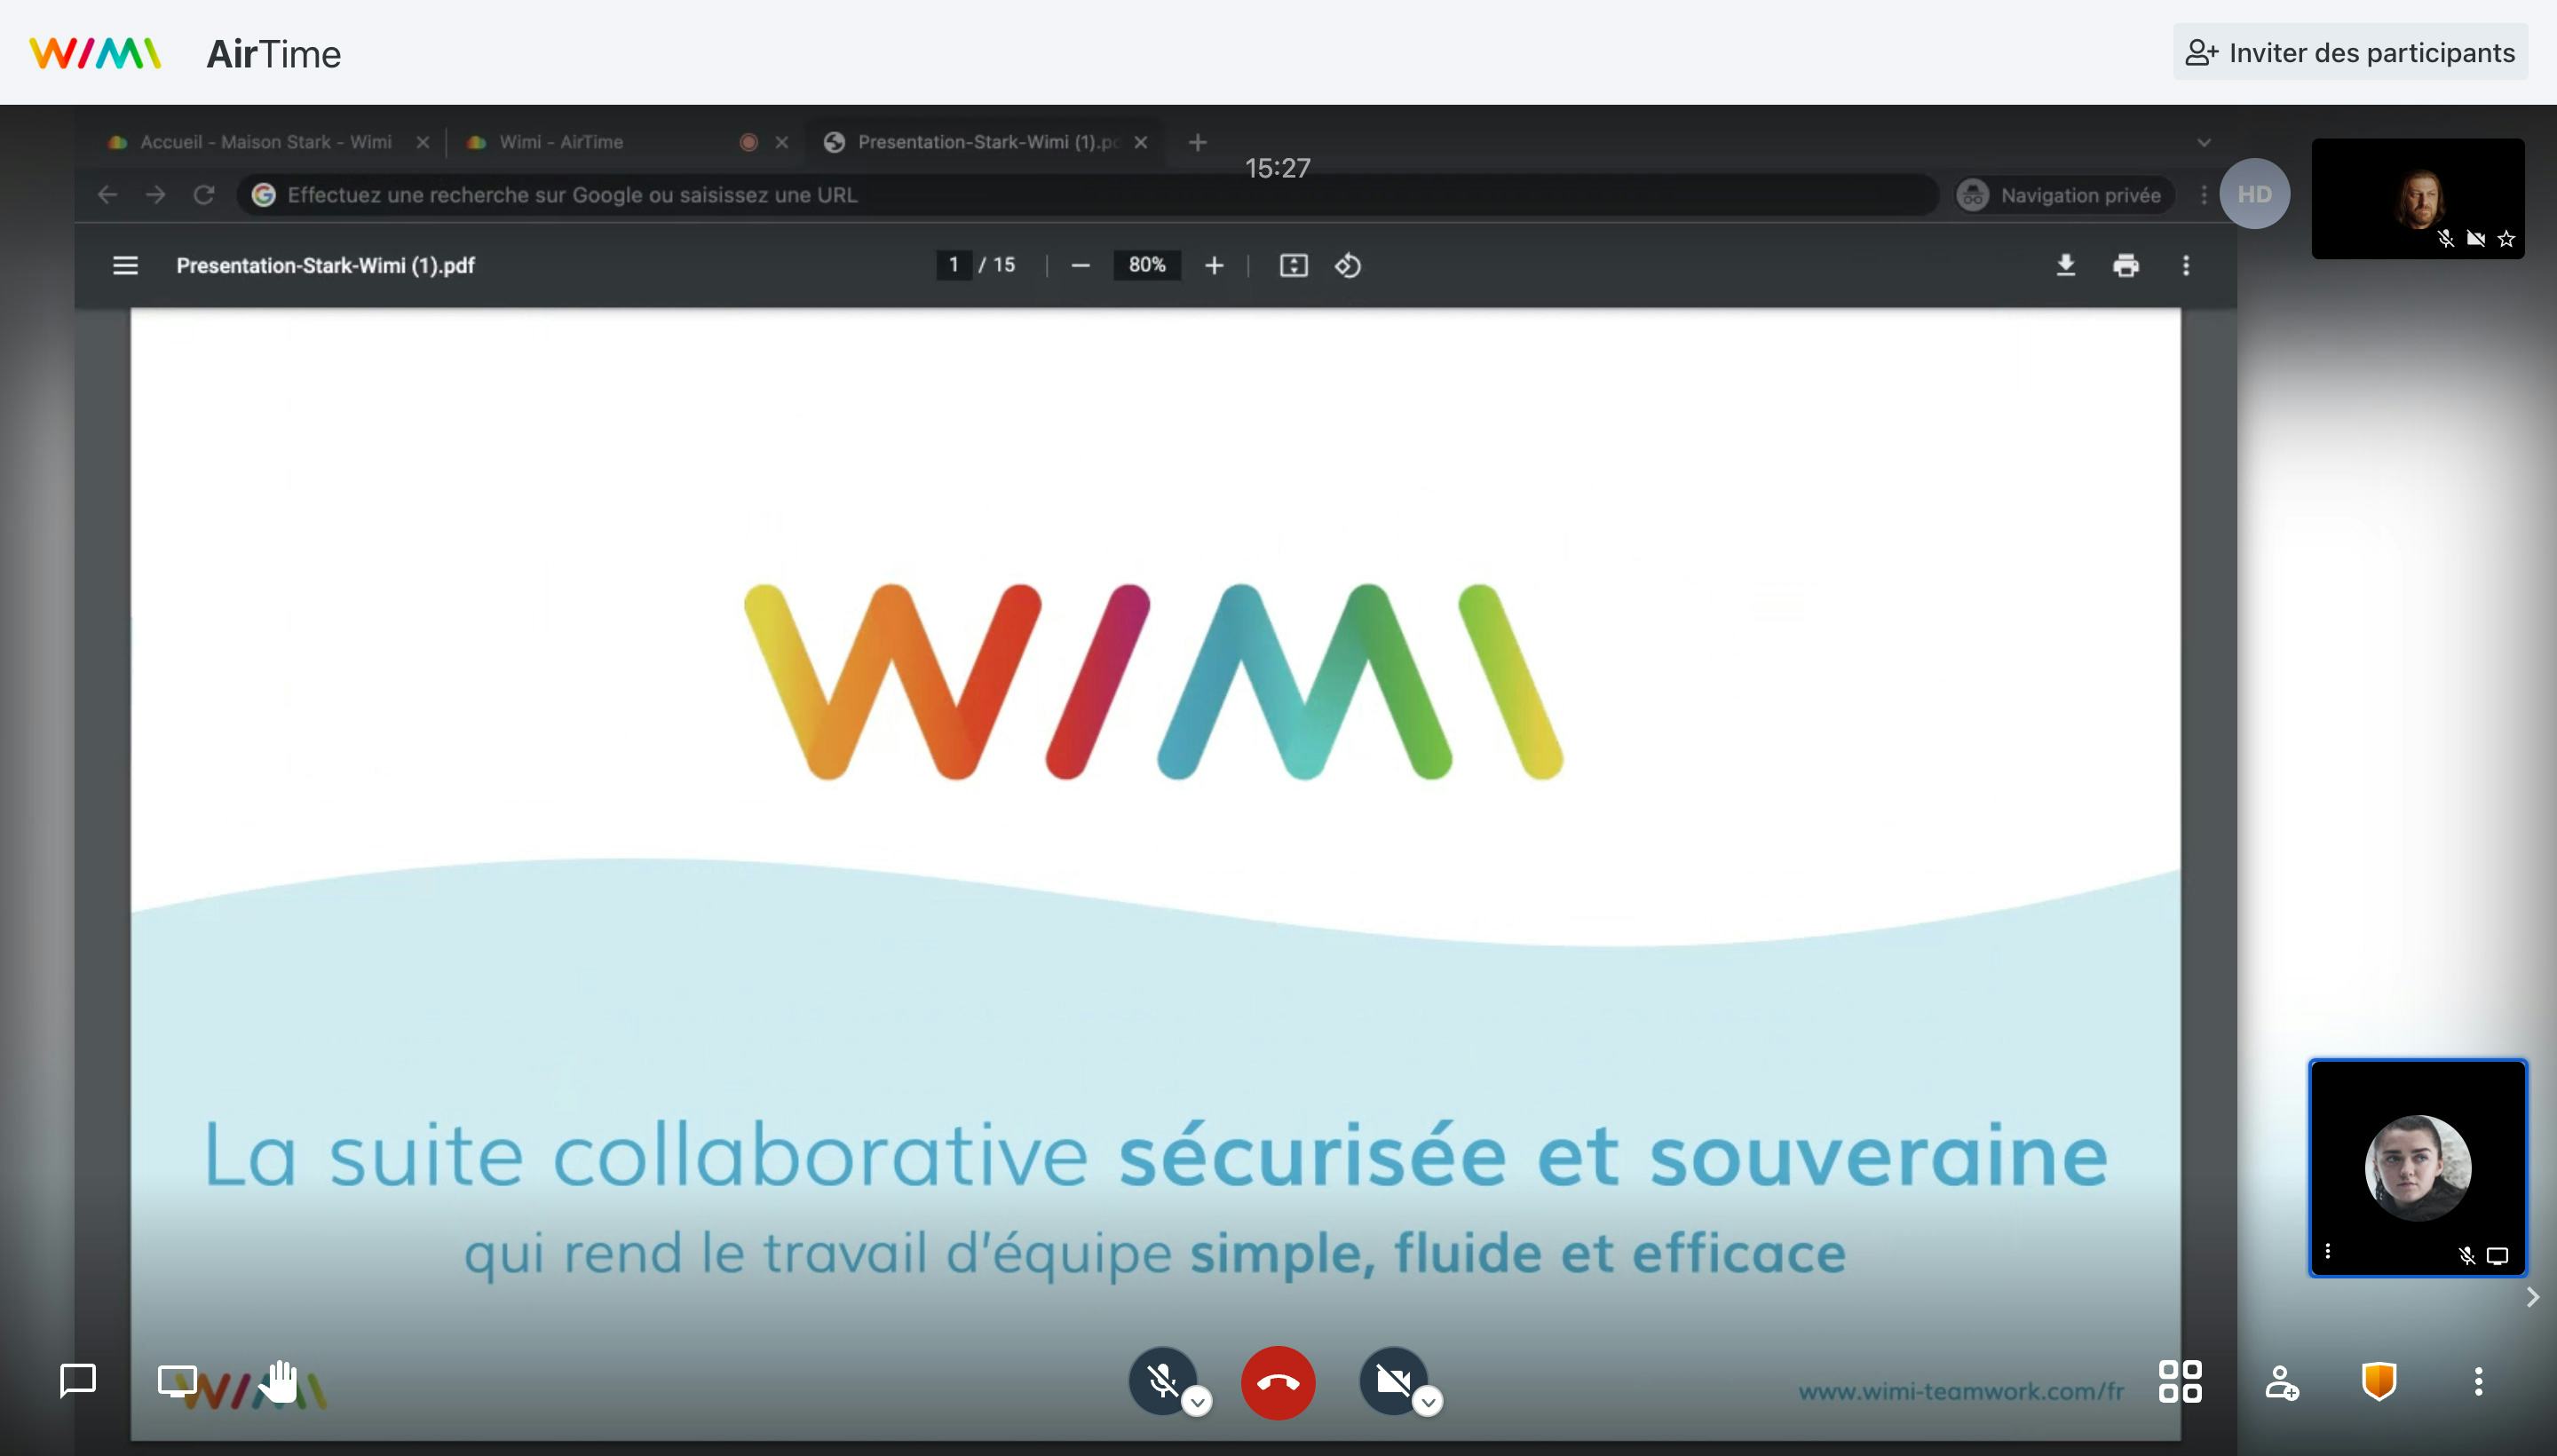 Wimi Software - 8